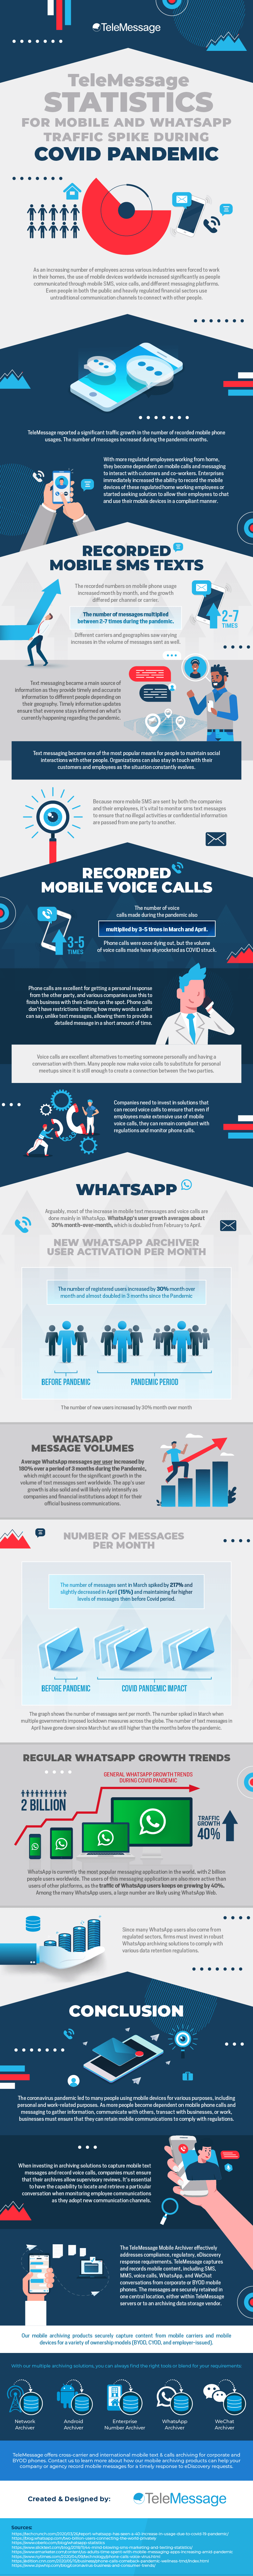 WhatsApp Archiving